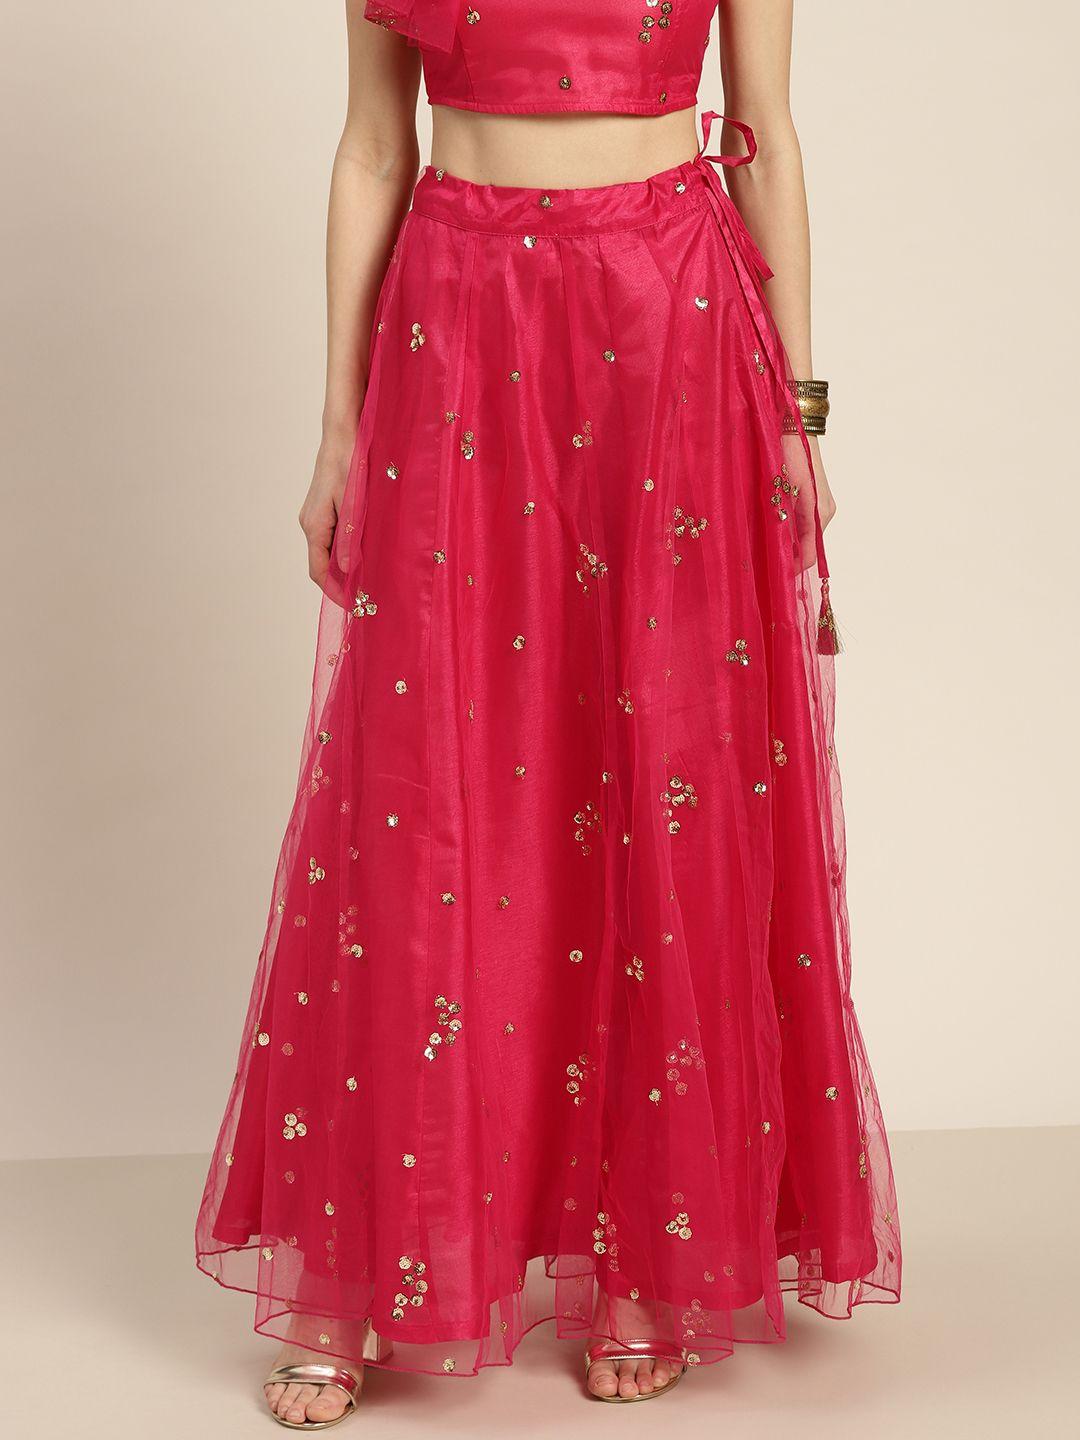 shae-by-sassafras-fuchsia-sequinned-embellished-tulle-maxi-skirt